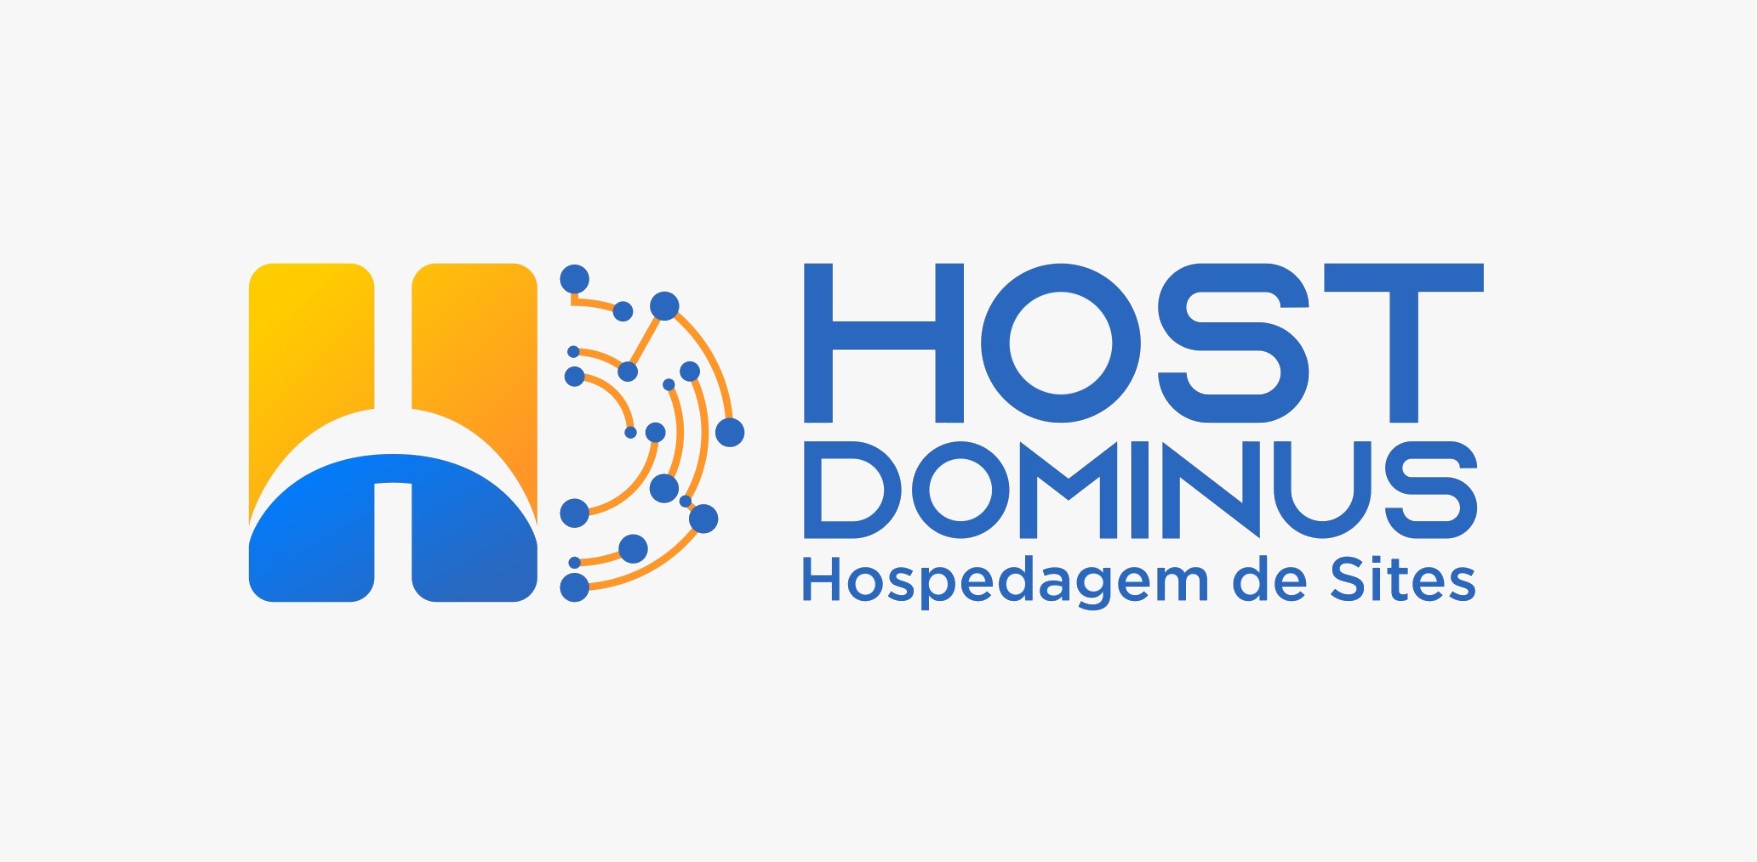 HostDominus - hostdominus.com.br*